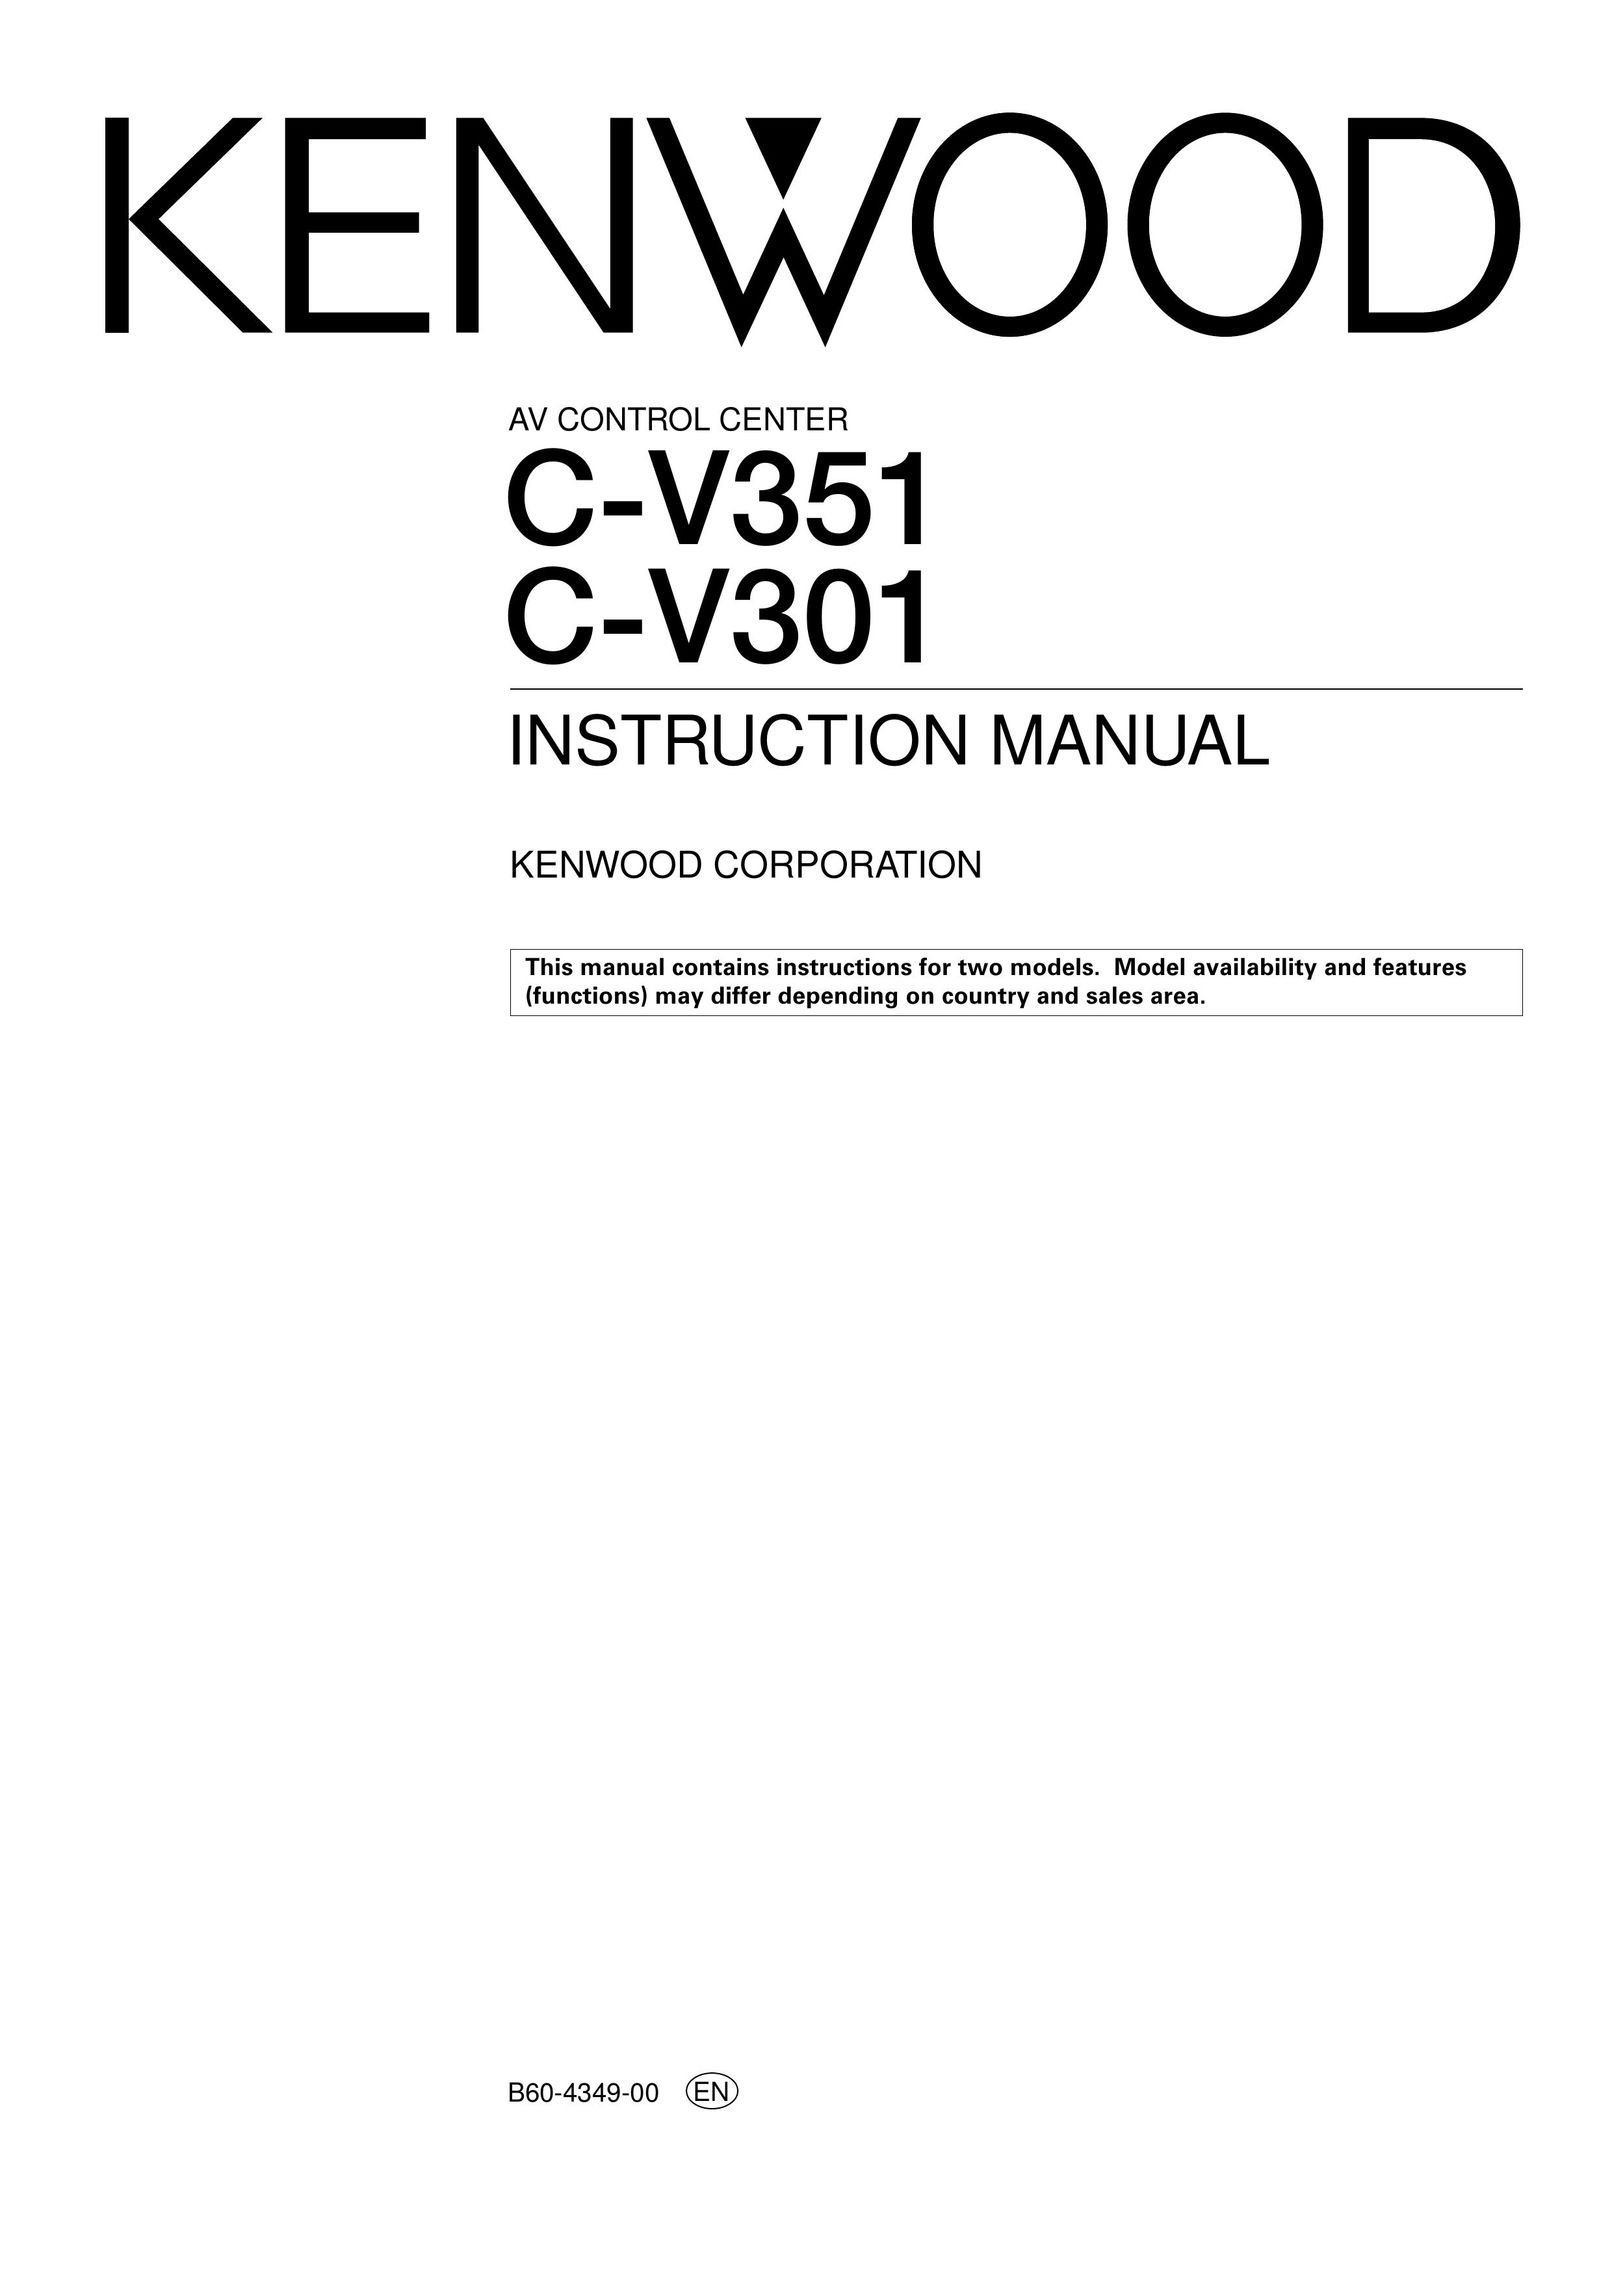 Kenwood C-V301 Stereo Receiver User Manual